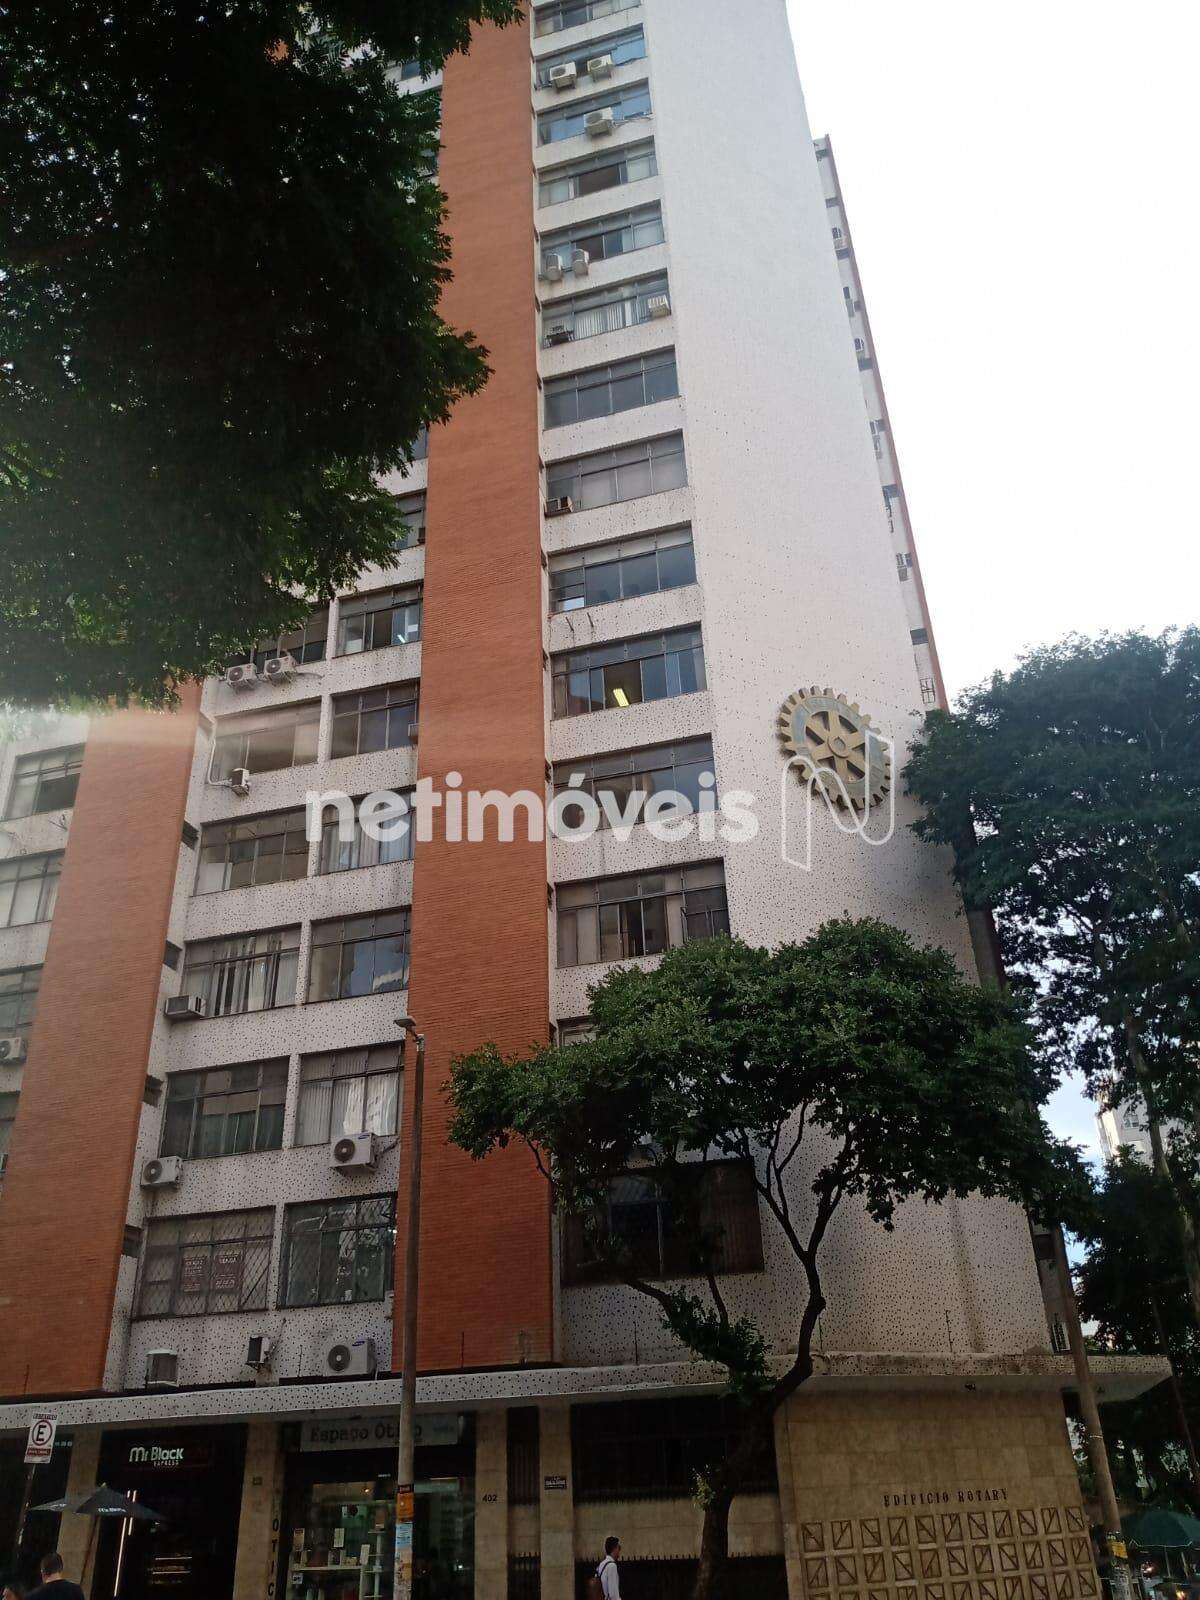 Rotary Club Belo Horizonte